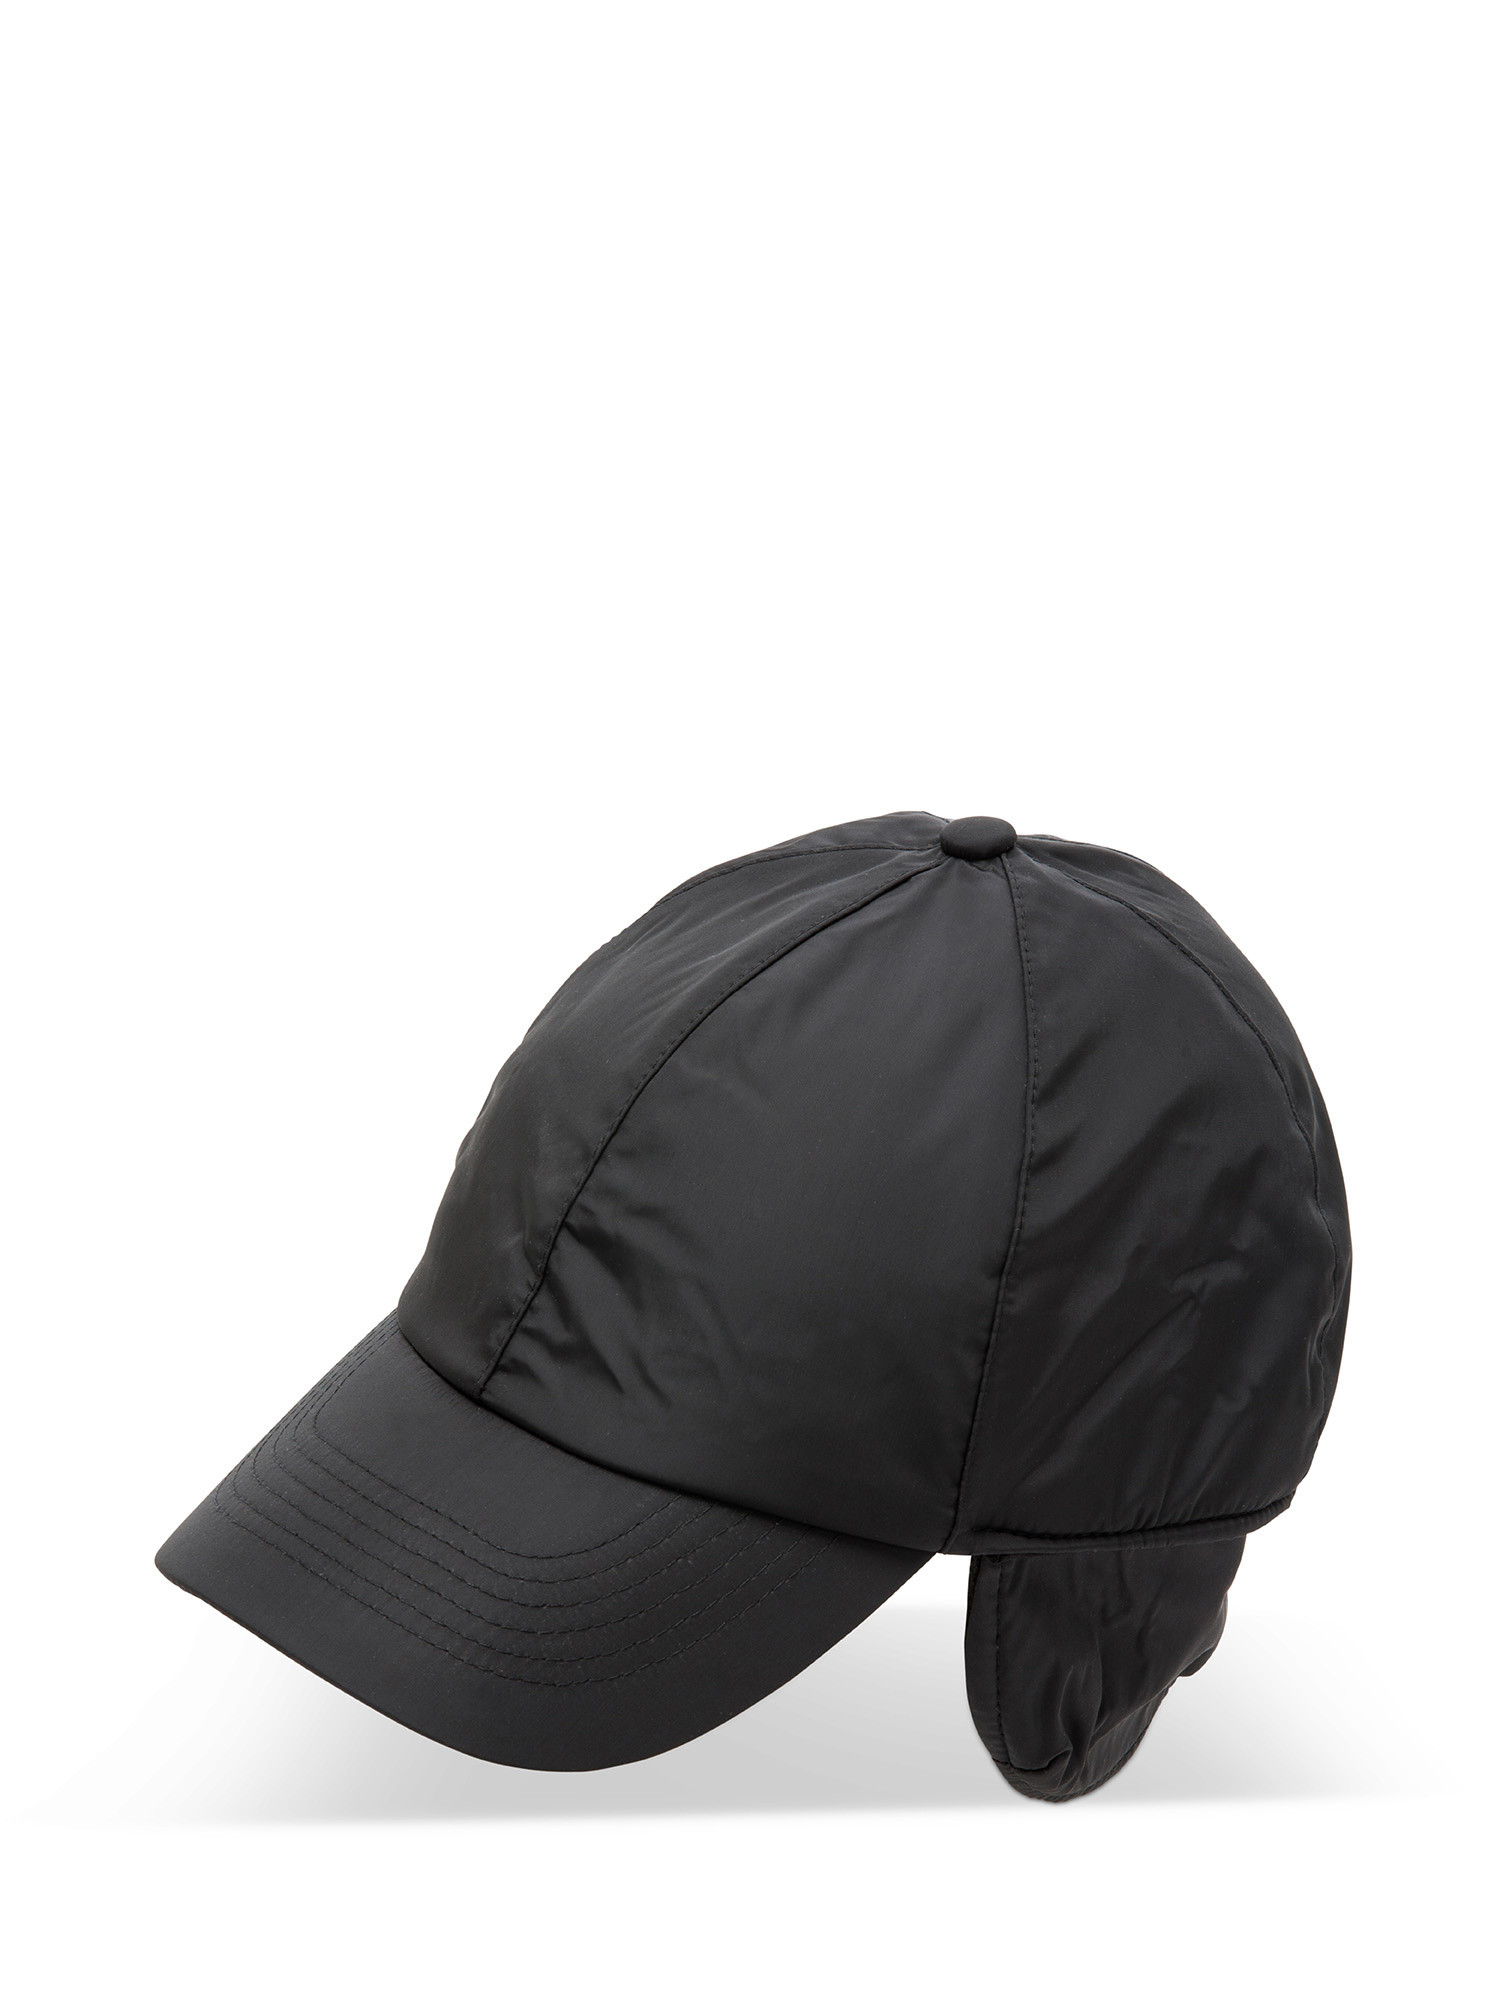 Luca D'Altieri - Nylon cap, Black, large image number 0